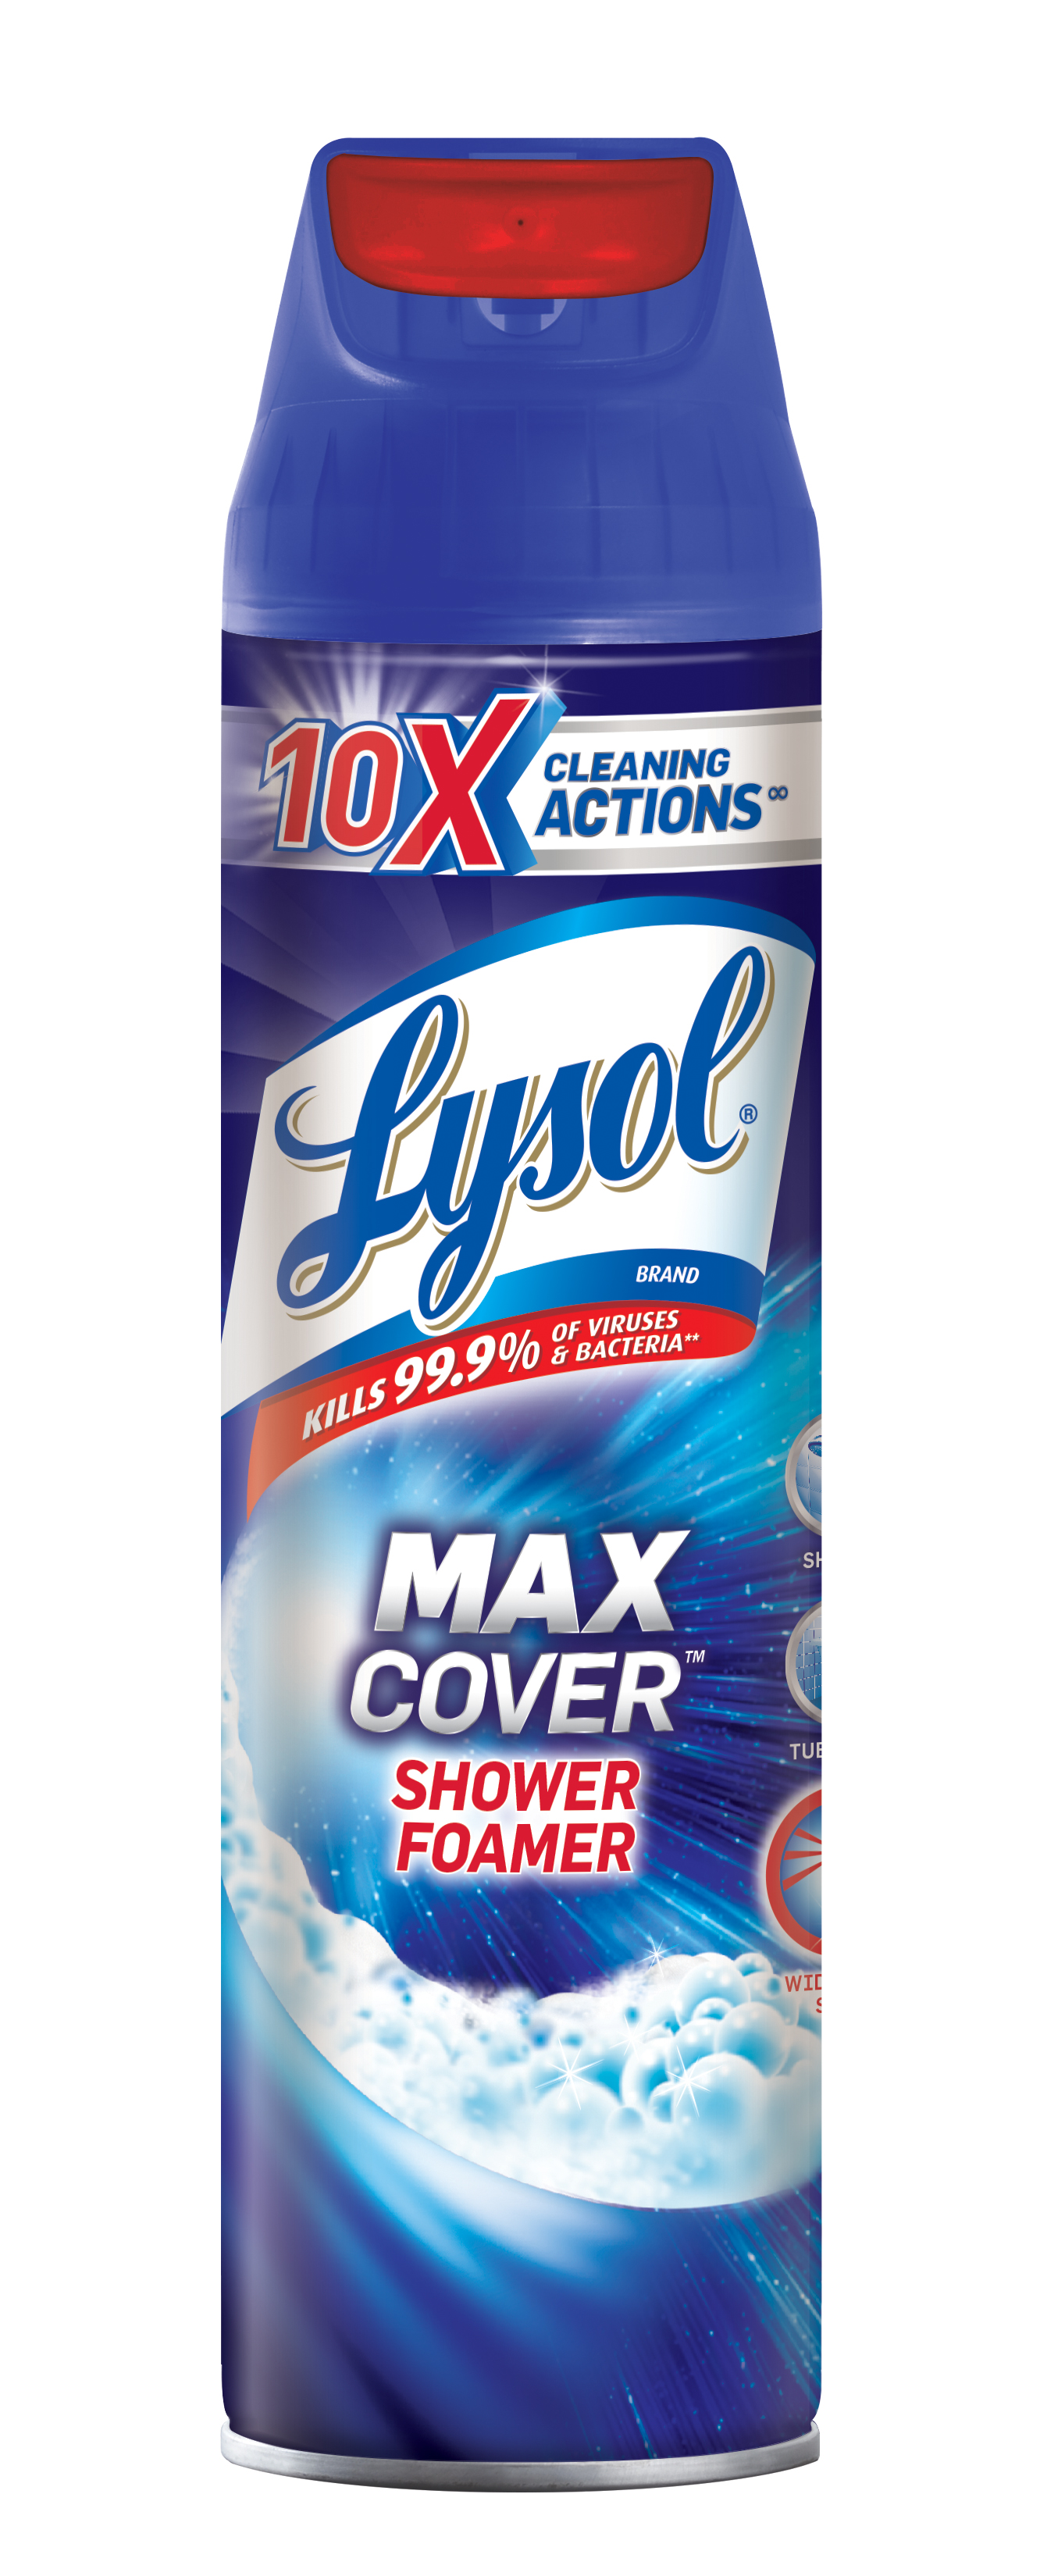 LYSOL Max Cover Shower Foamer Discontinued Dec 2021